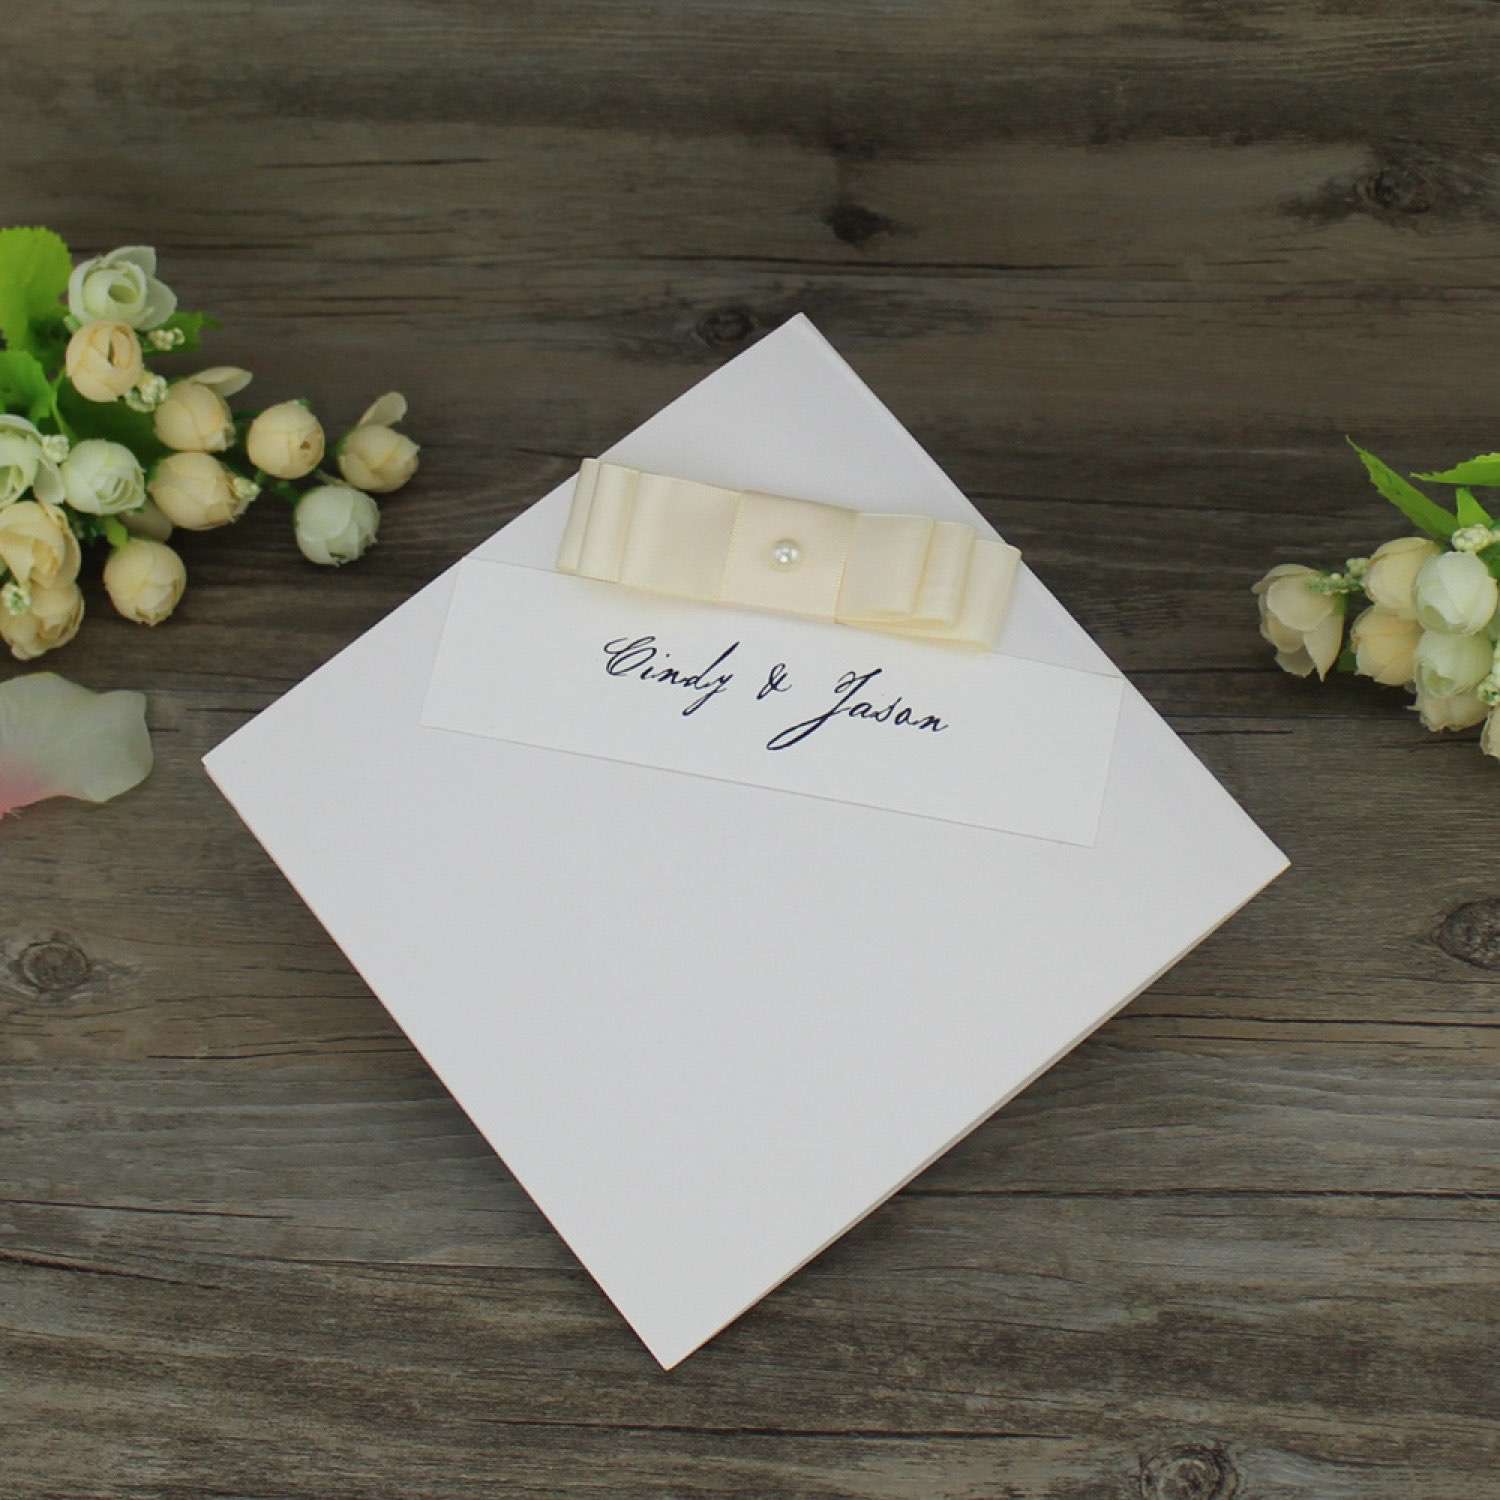 Square Foiling Invitation with Ribbon Bow Half Fold Wedding Card White Invitation Customized 